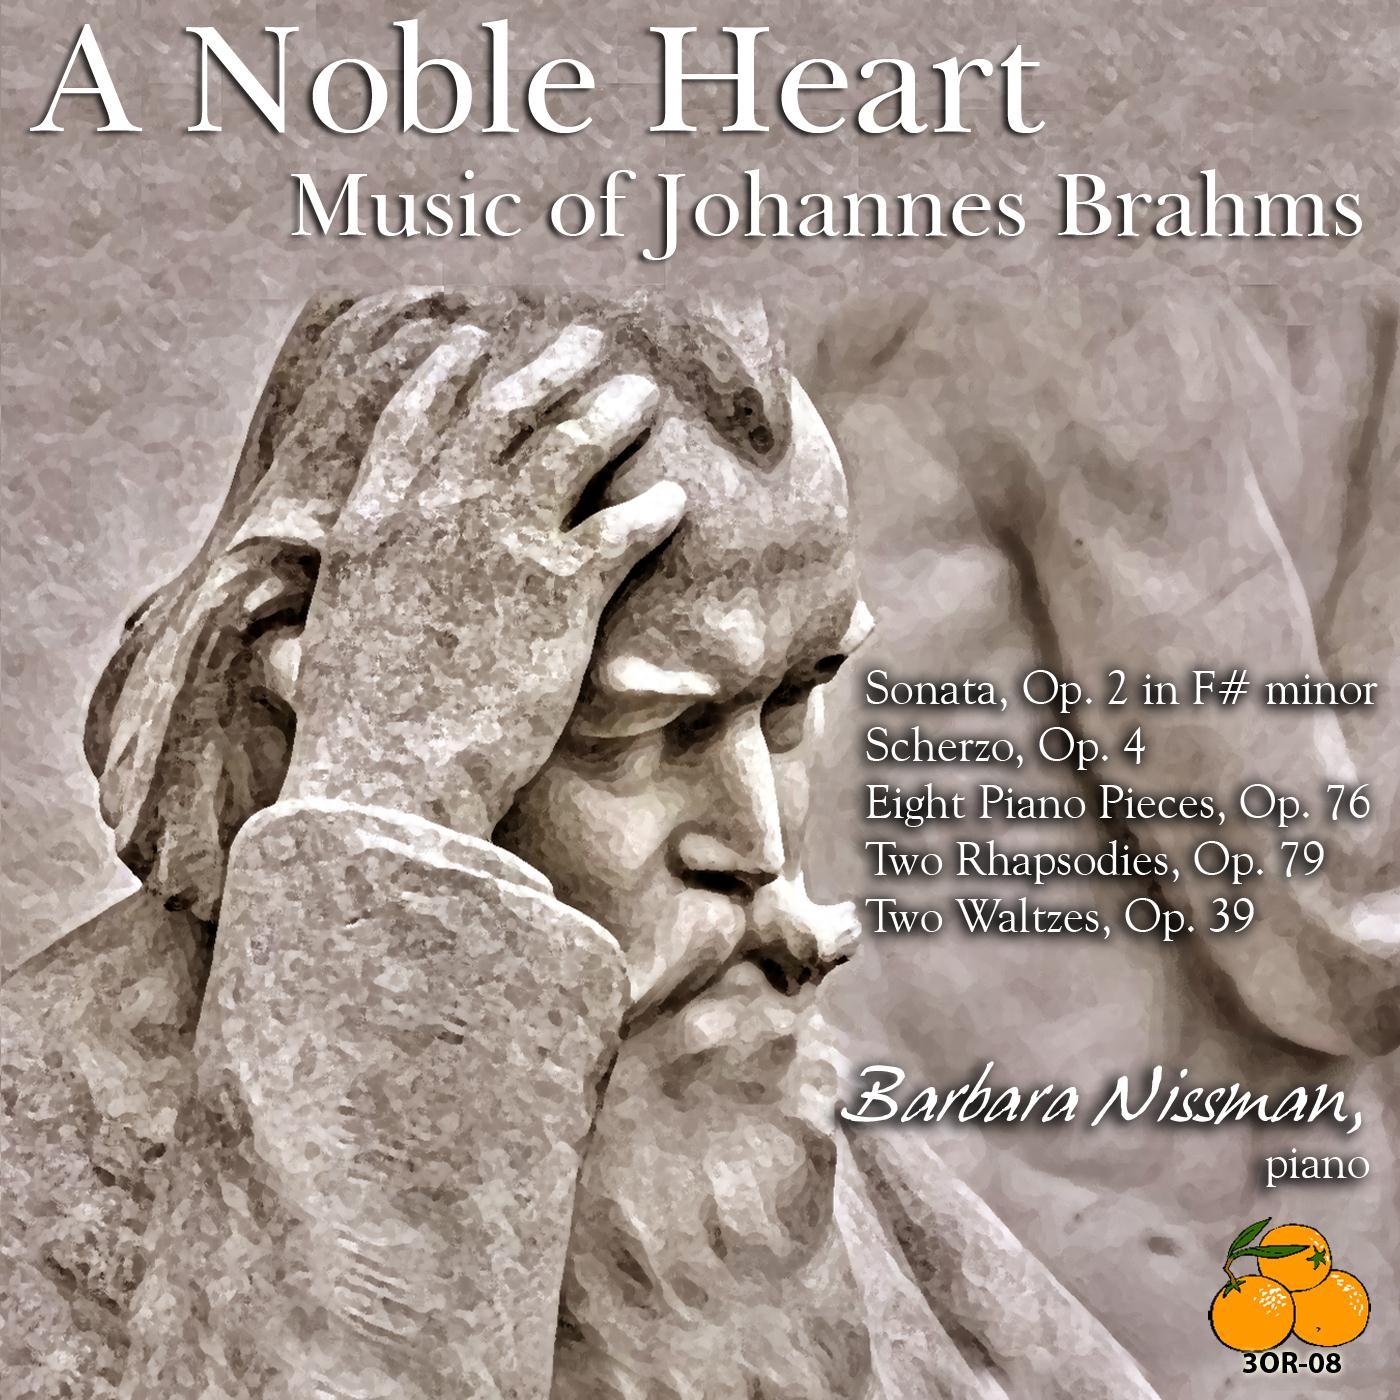 A Noble Heart: Music of Johannes Brahms